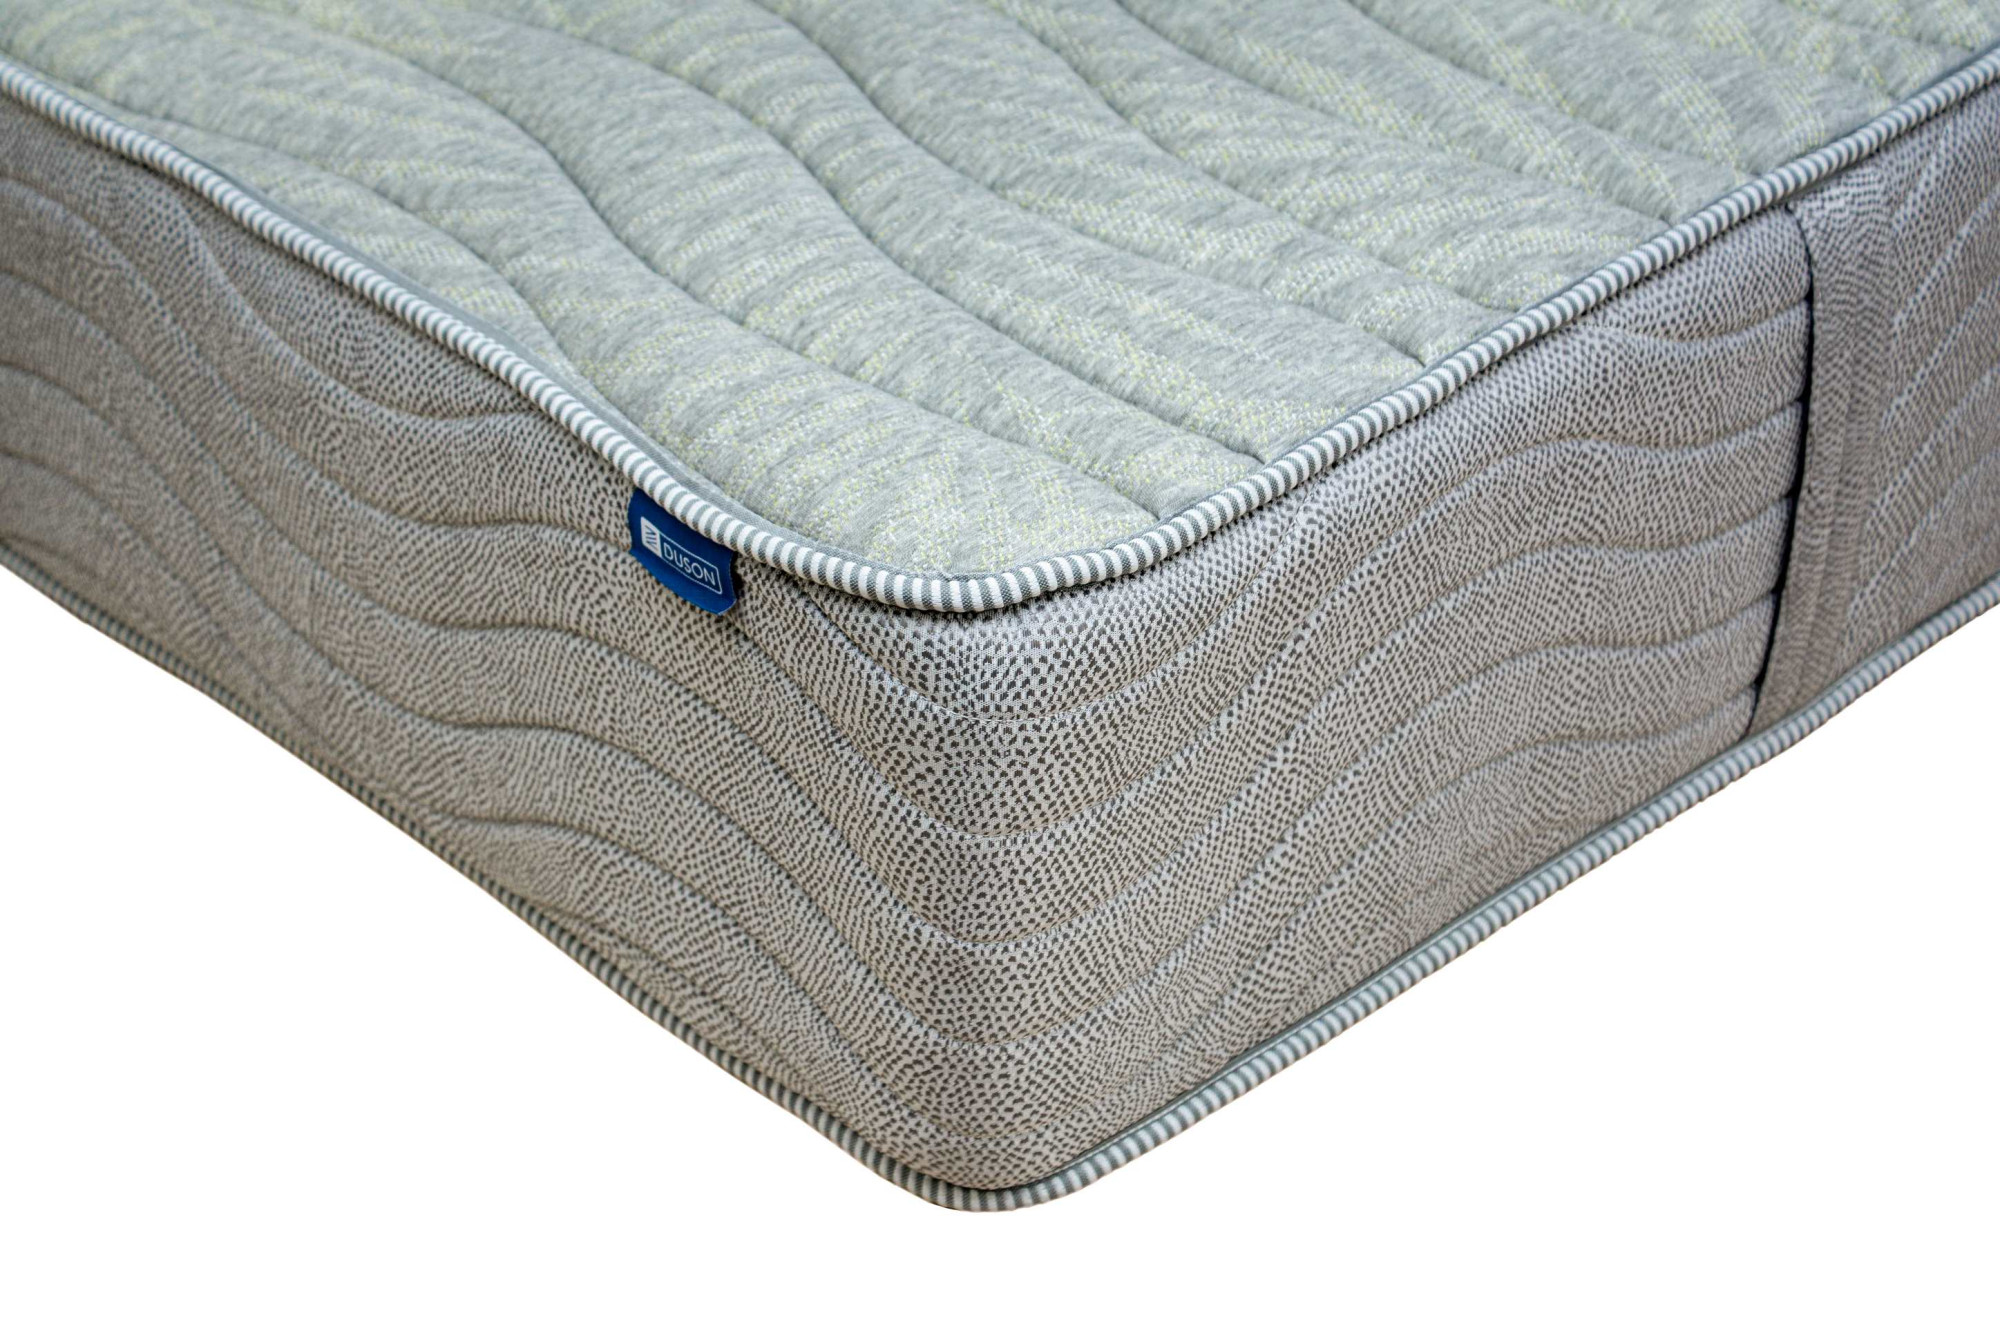 Orthopedic mattress Miami One-sided 70x190 hard, 25cm